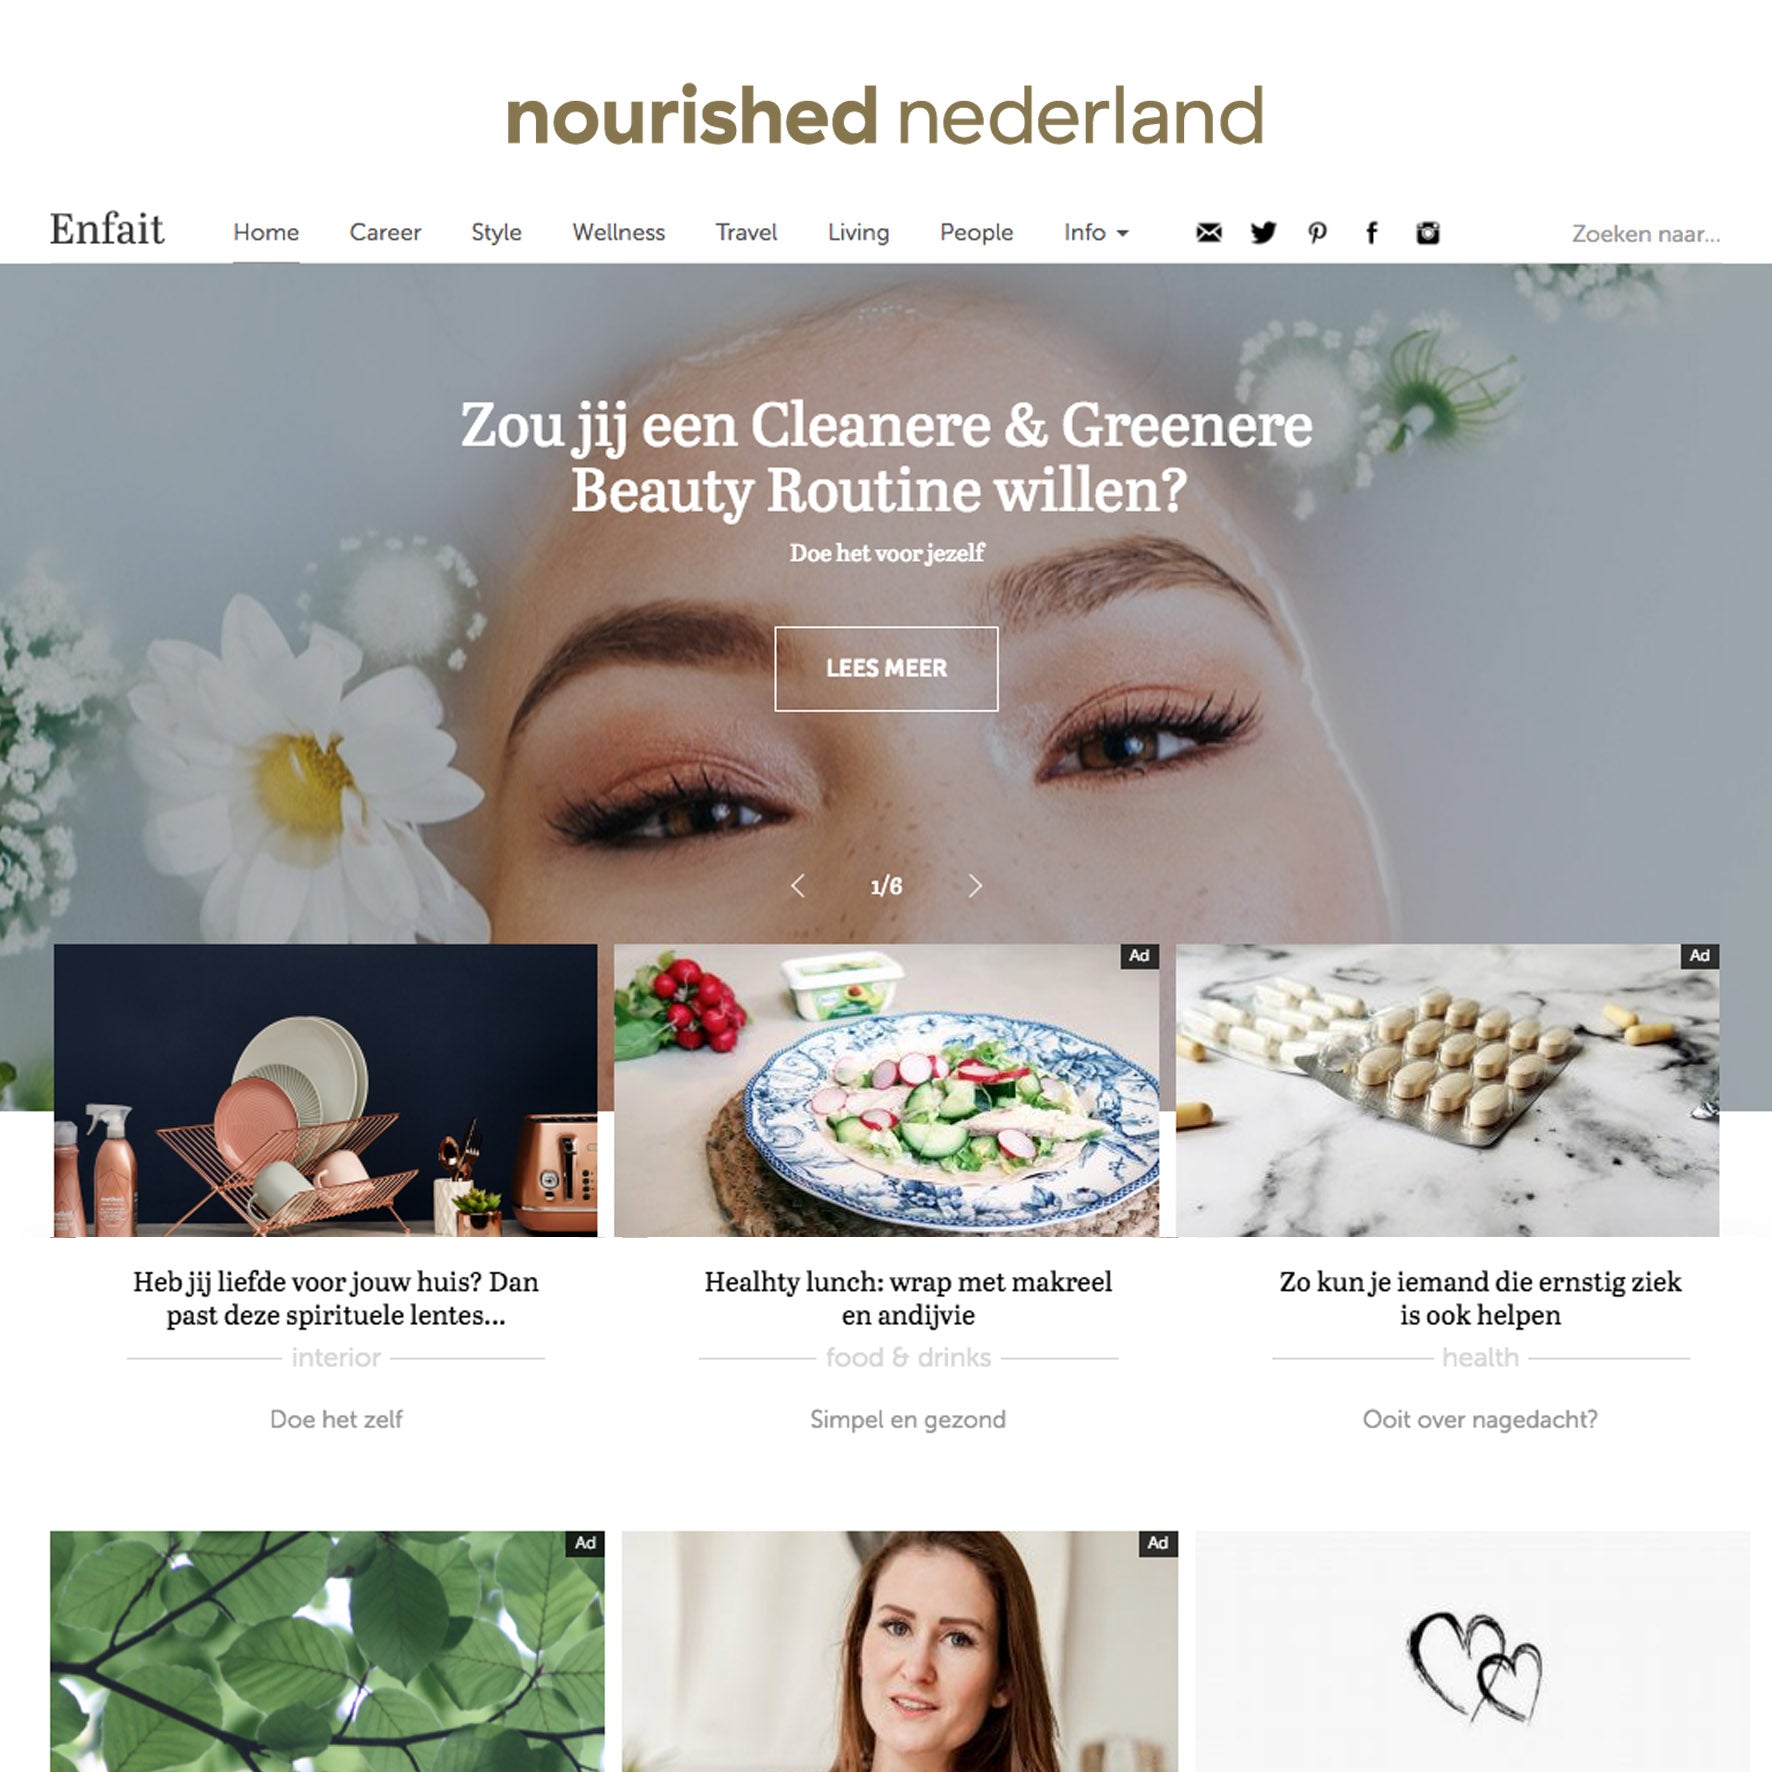 Enfait Magazine, Nourished Nederland, online magazine, blogpagina, natural beauty, natuurlijke make-up, natuurlijke cosmetica, vegan lifestyle, vegan cosmetica, duurzaam leven